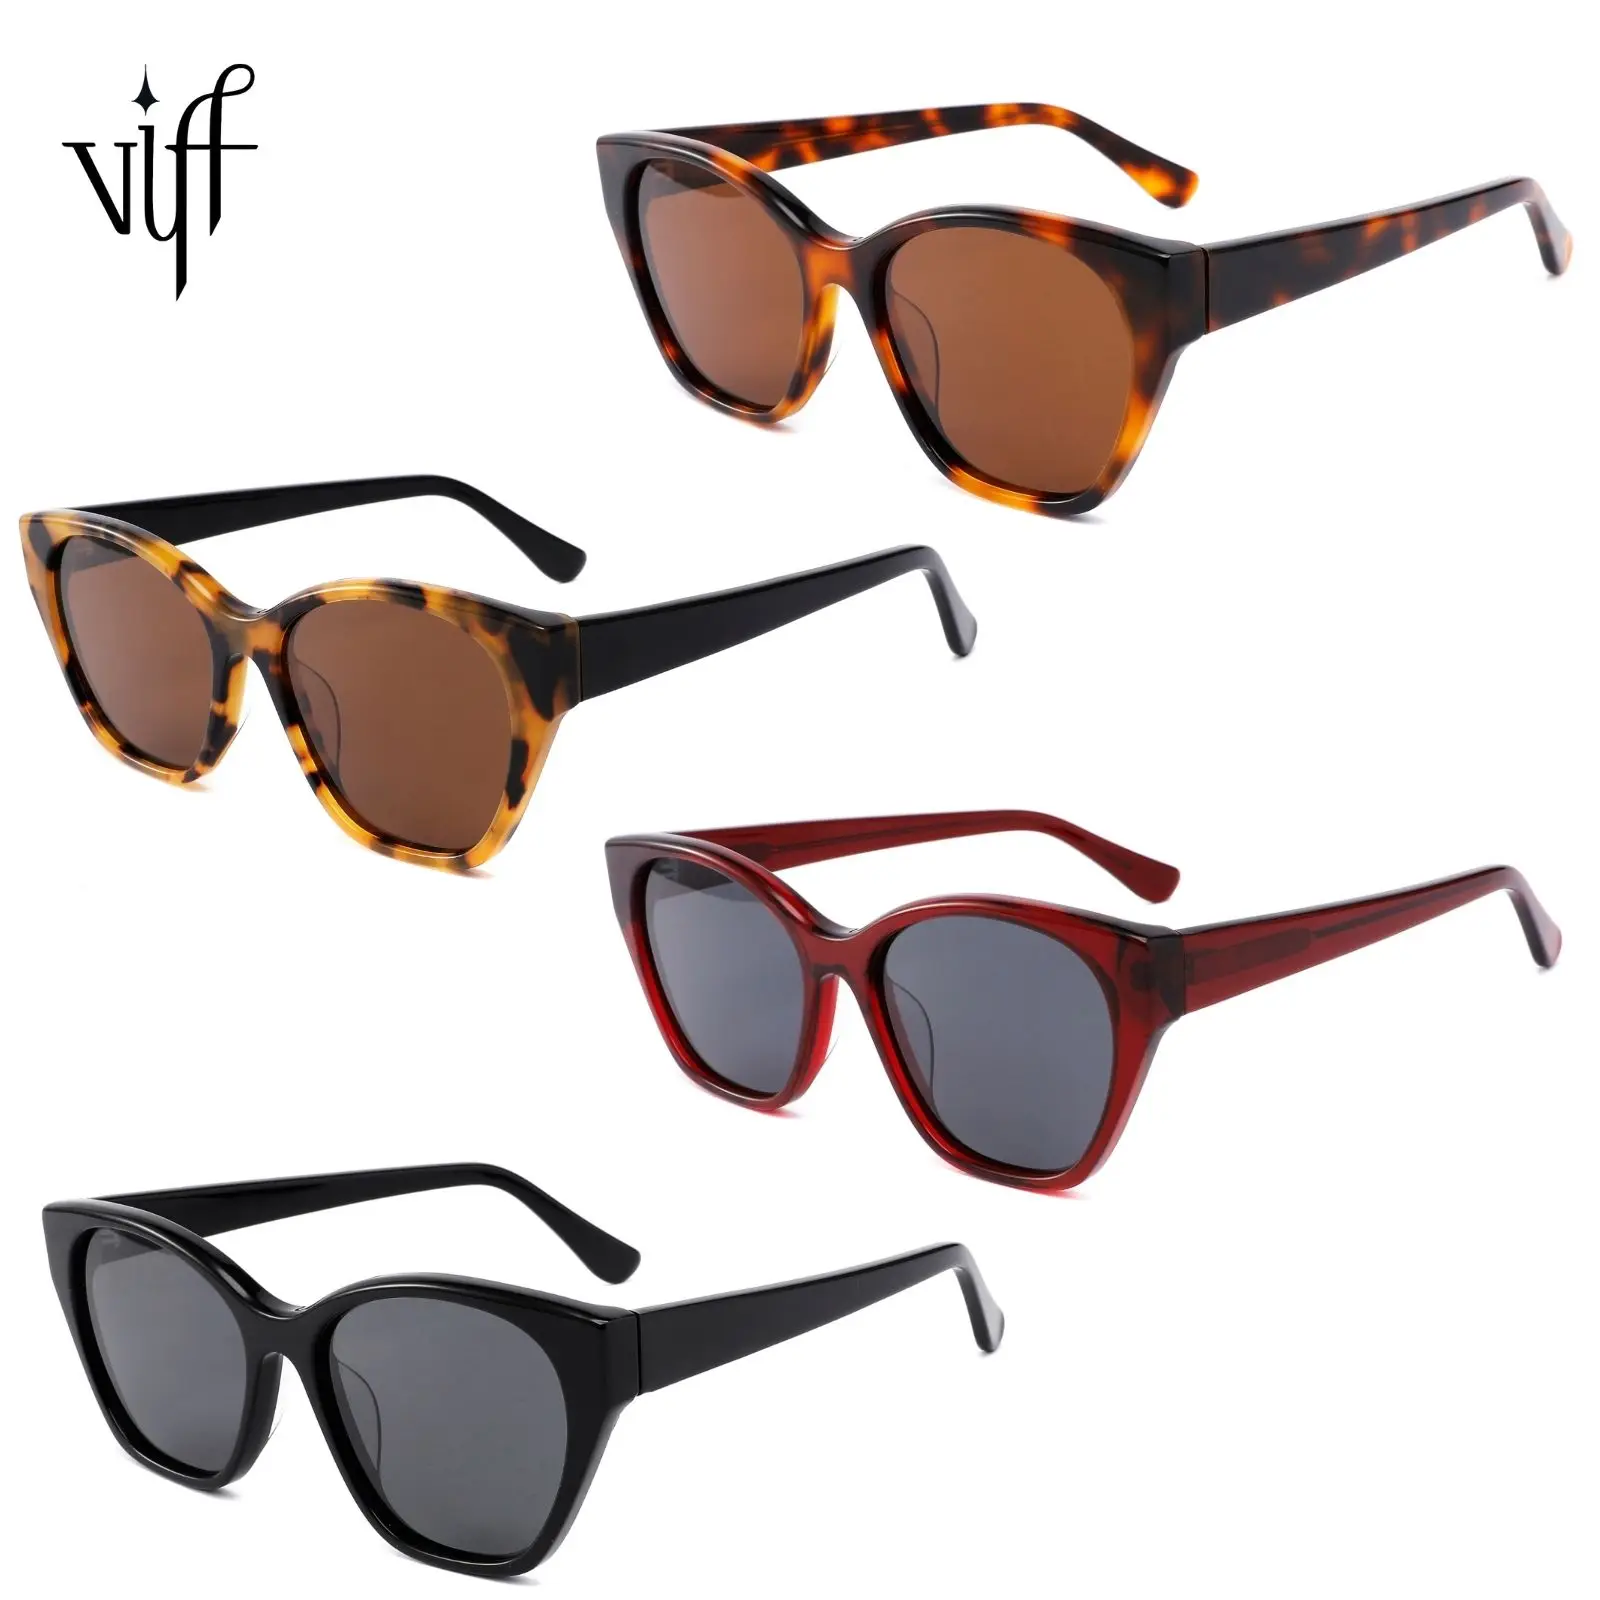 

VIFF FG1227 Acetate Tortoiseshell Vintage Handmade Eyeglasses Men Woman Unisex High Quality Manufactures Fashion Sunglasses 2021